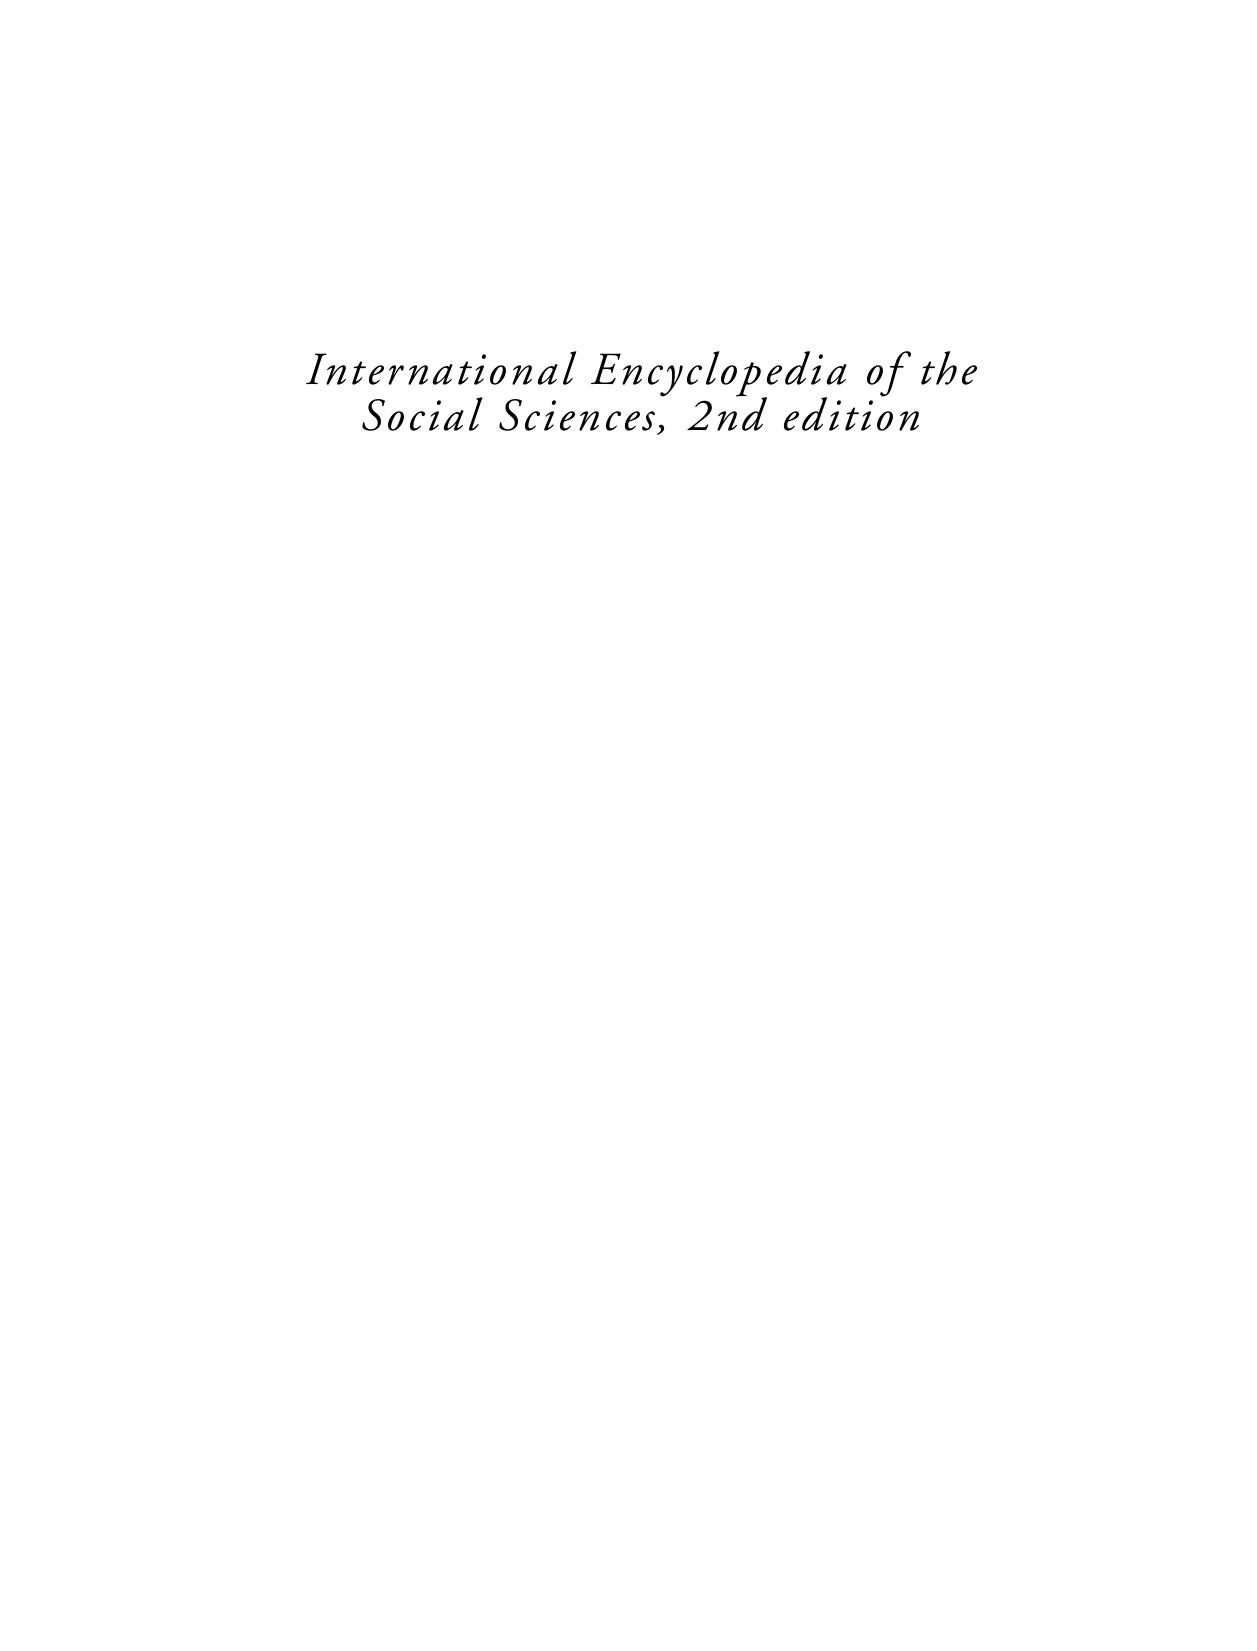 [Darrity W] International encyclopaedia of social (BookFi.org)